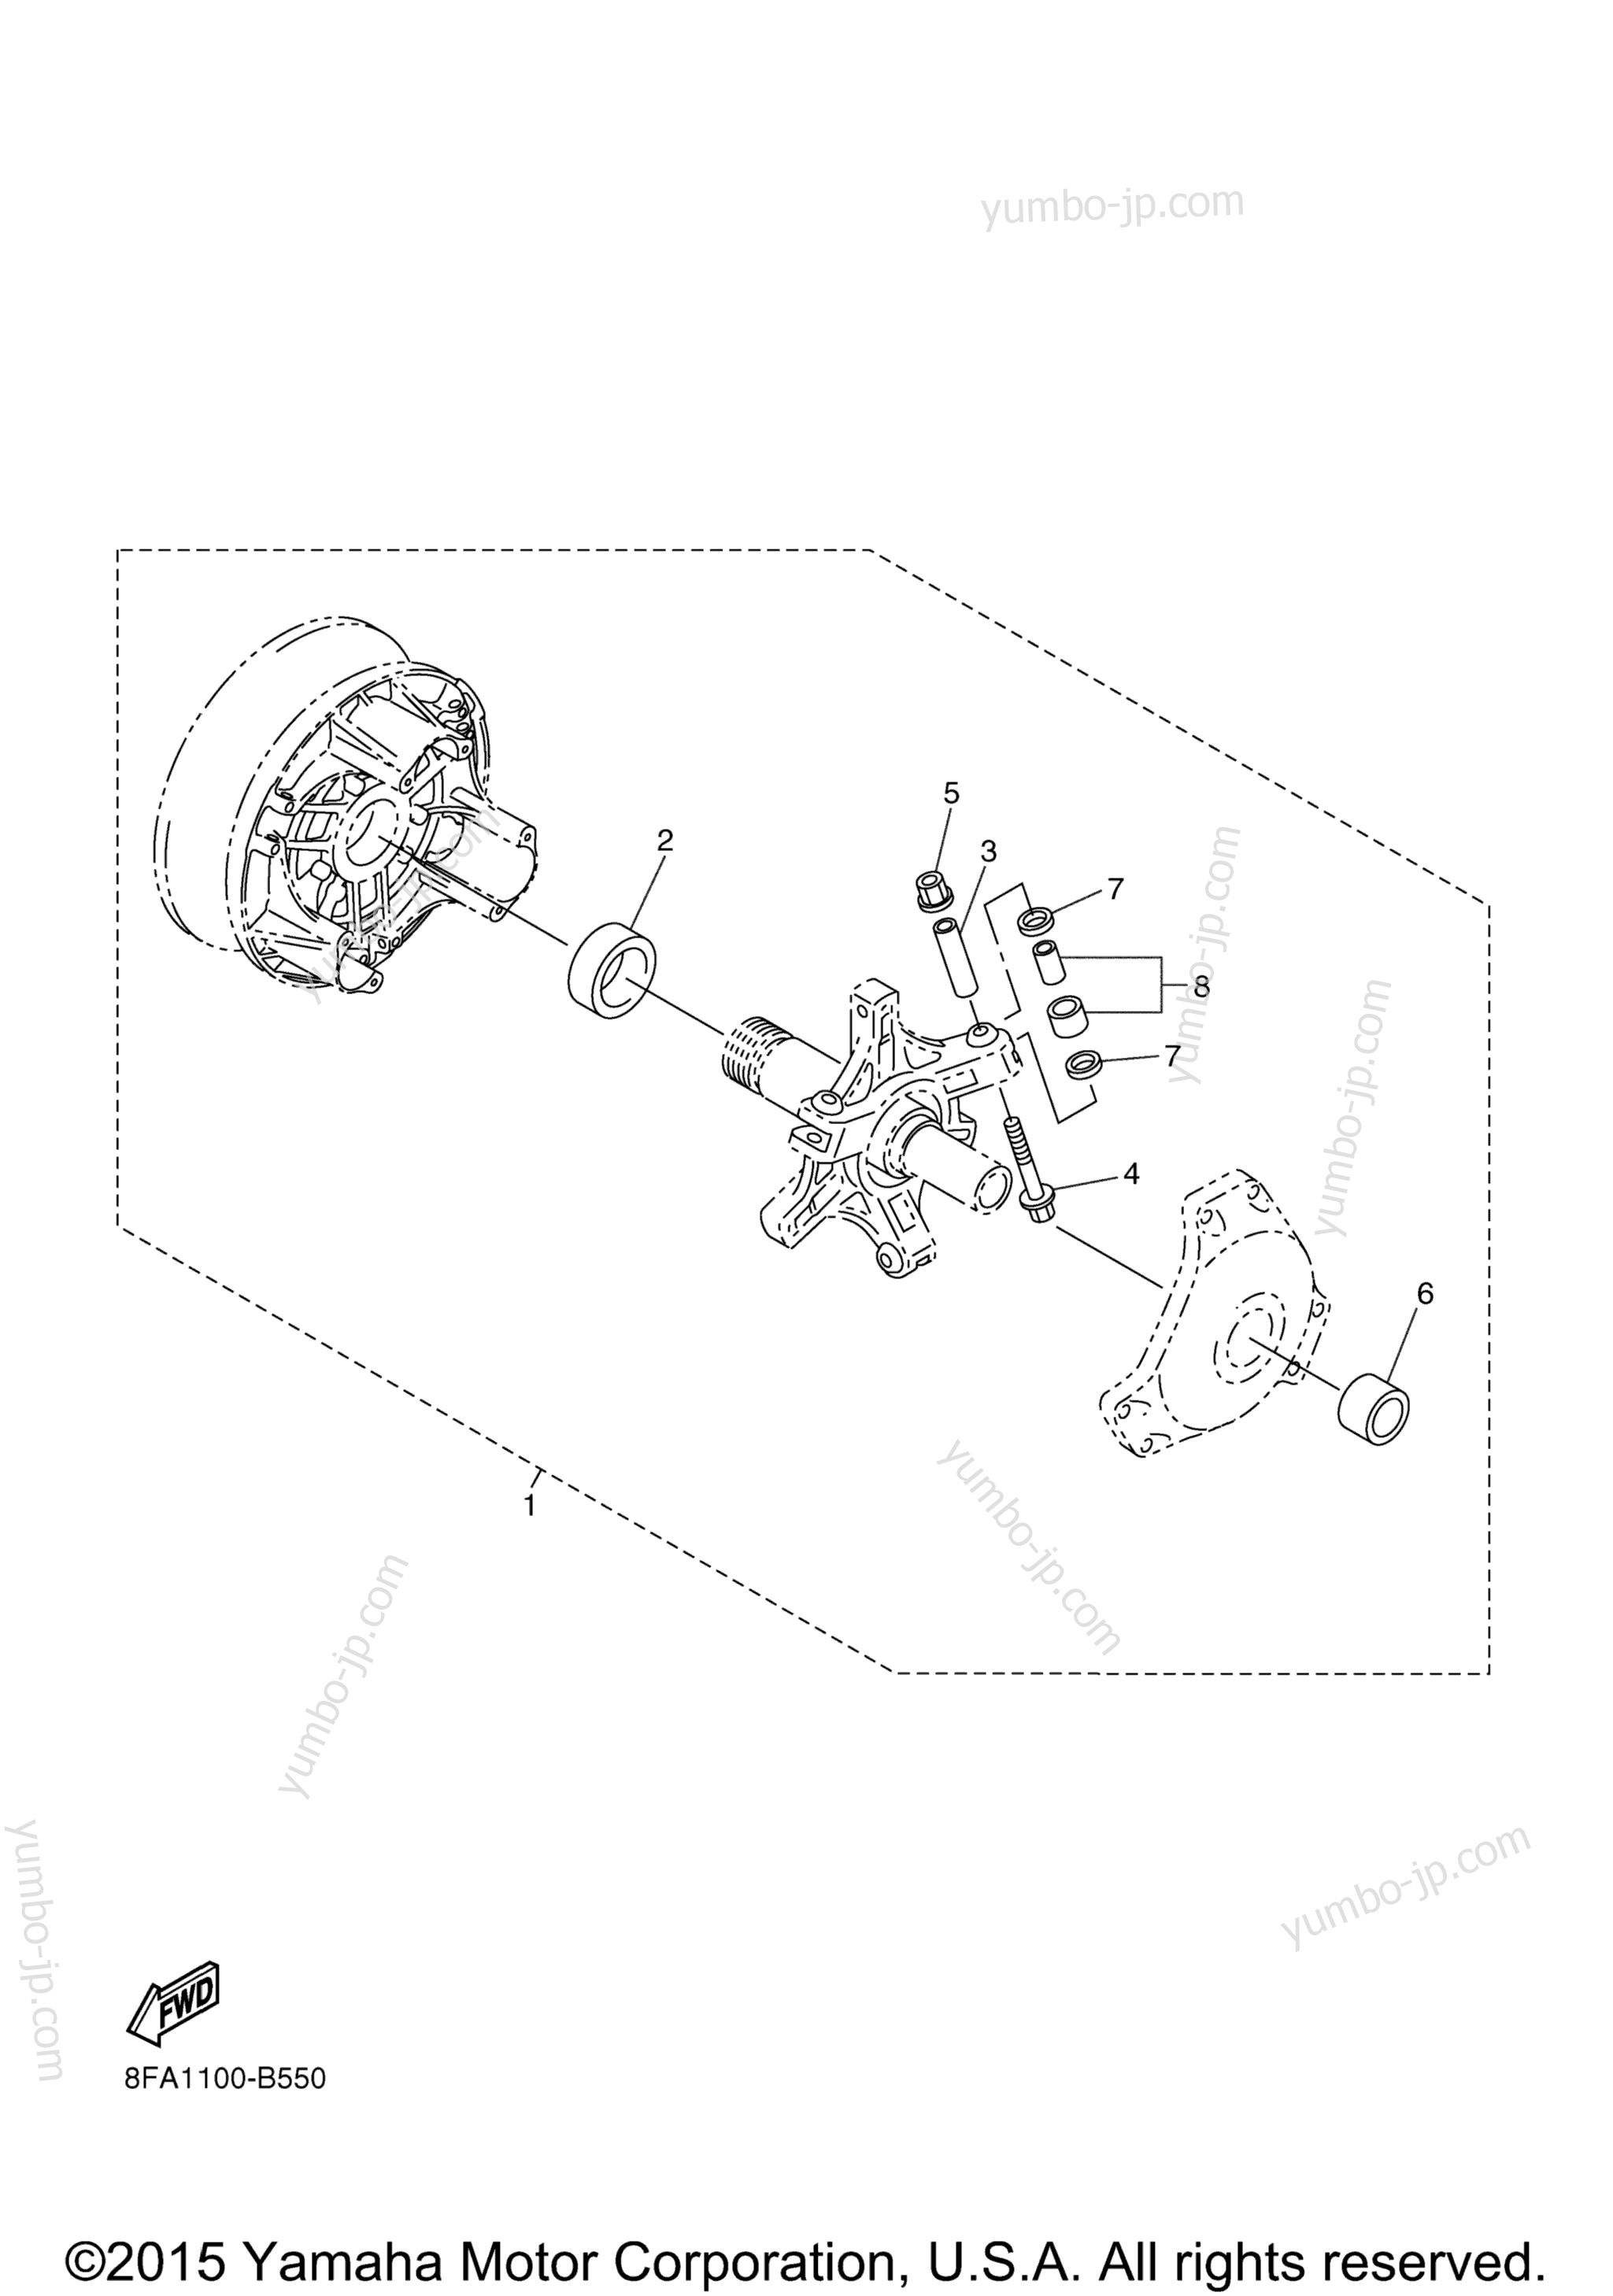 Alternate Clutch Tune Up Kit for snowmobiles YAMAHA SRVIPER M TX 153 SE (SR10M53SFL) 2015 year